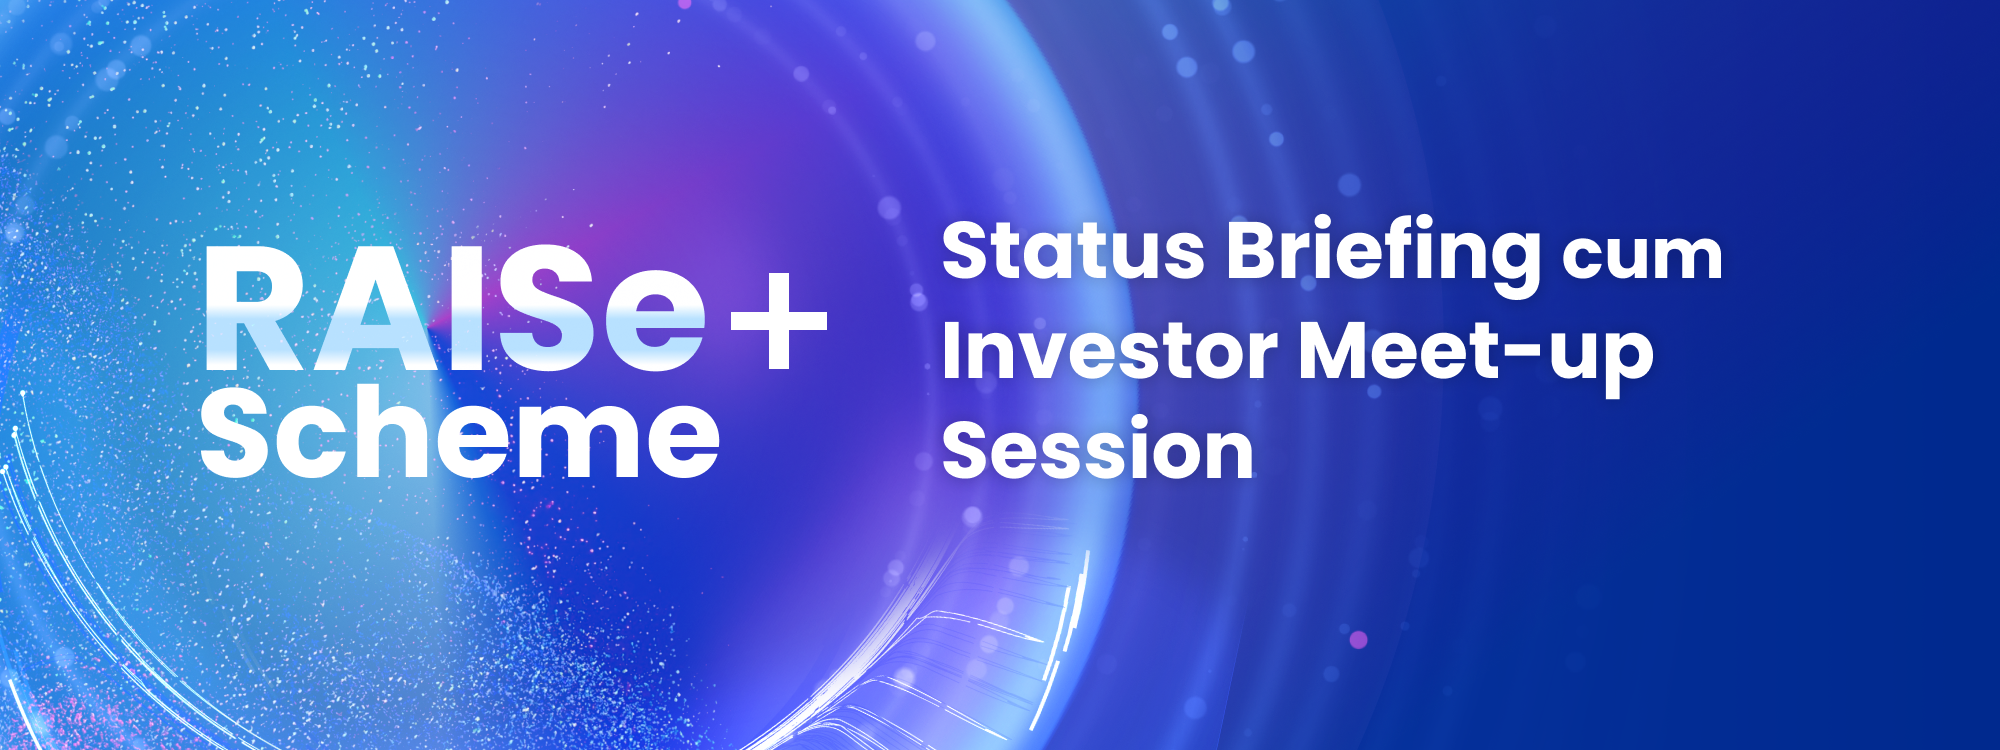 RAISe+ Scheme: Status Briefing cum Investor Meet-up Session (8 Nov)